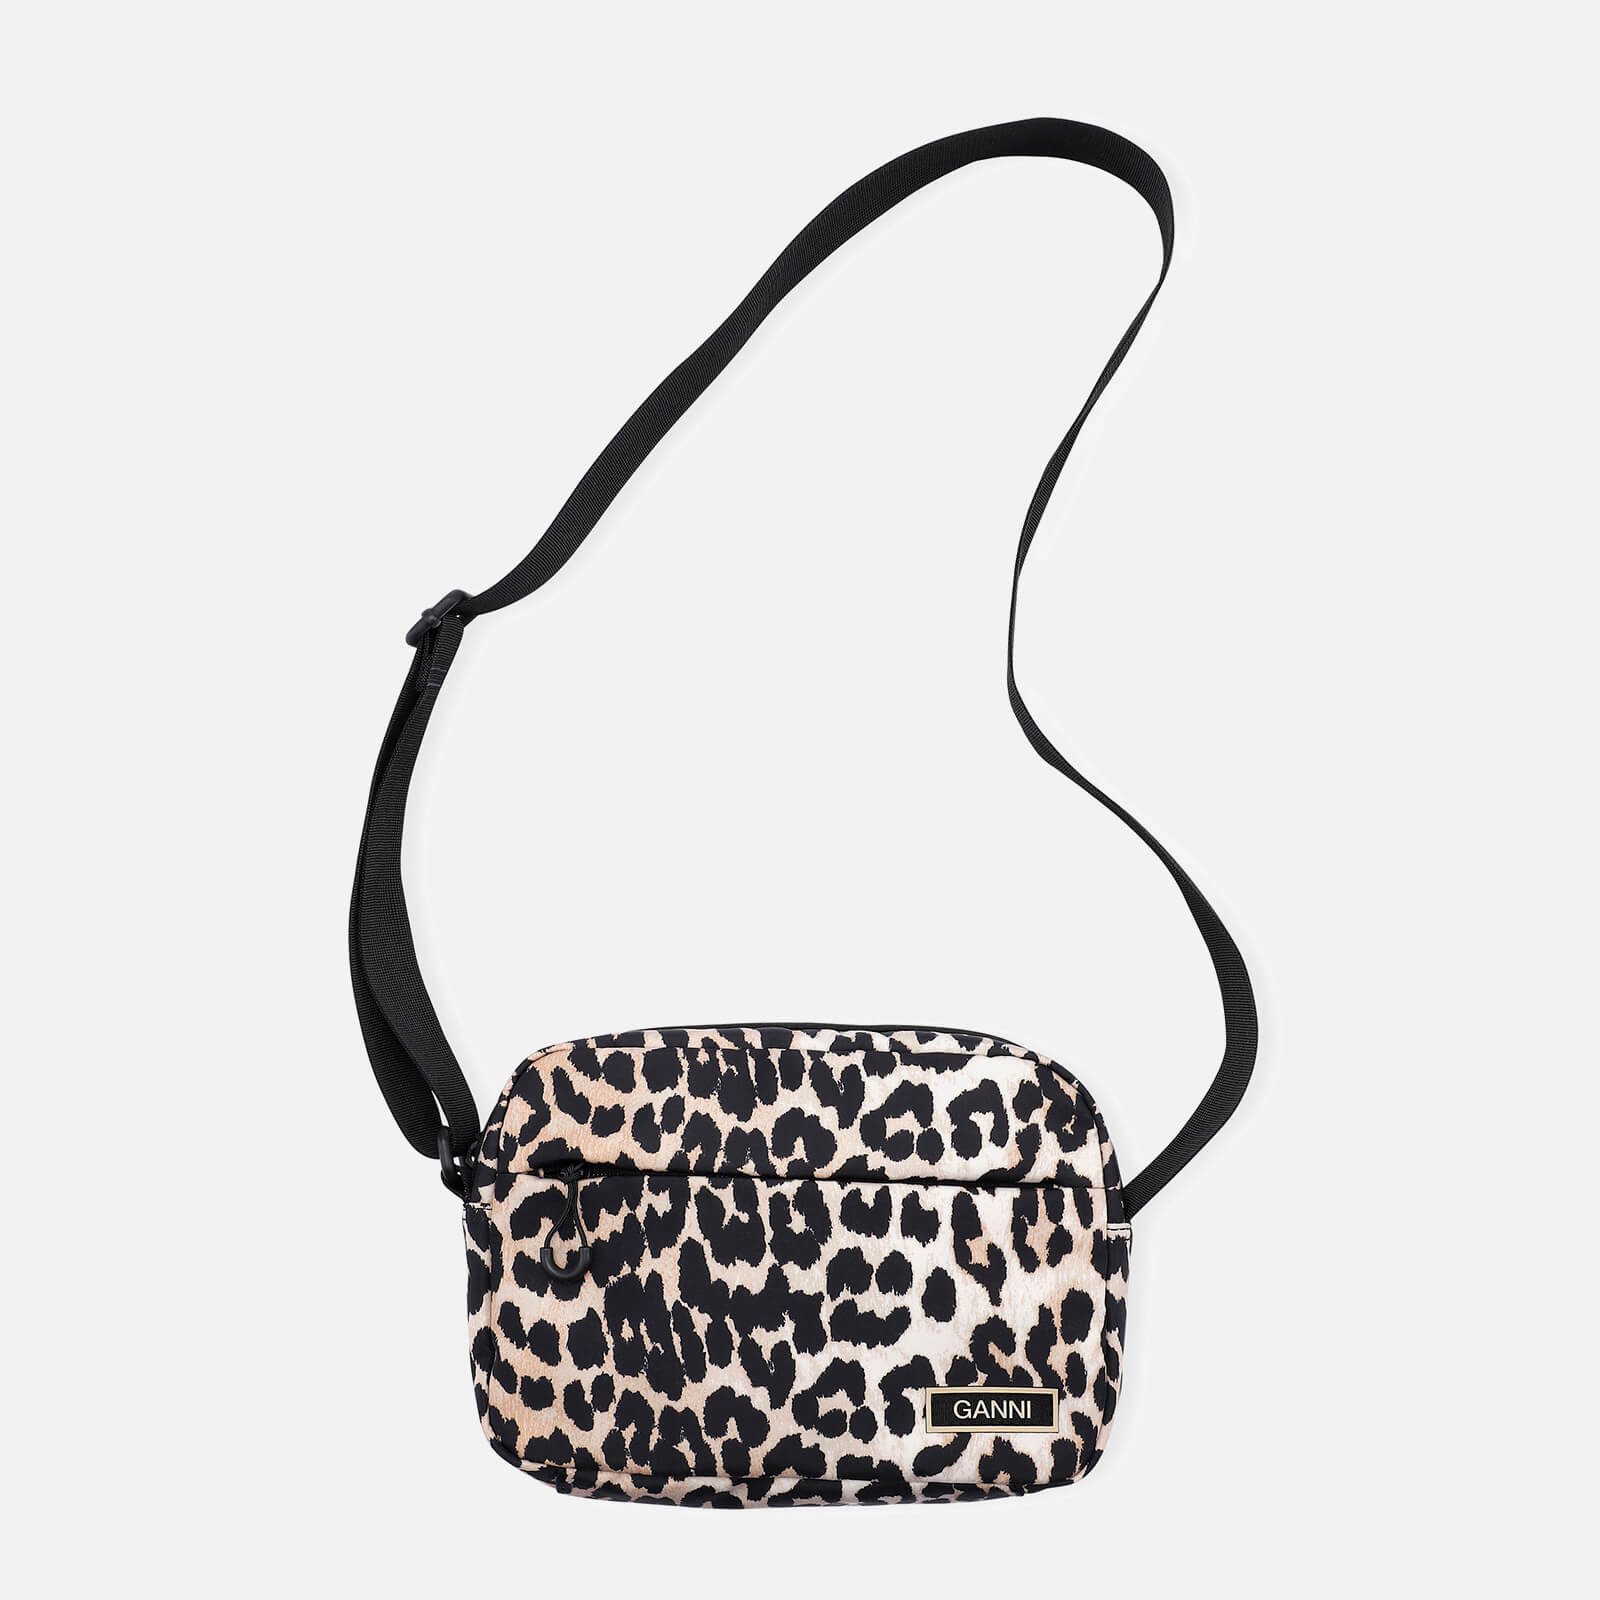 Ganni Women's Recycled Tech Fabric Bags - Leopard